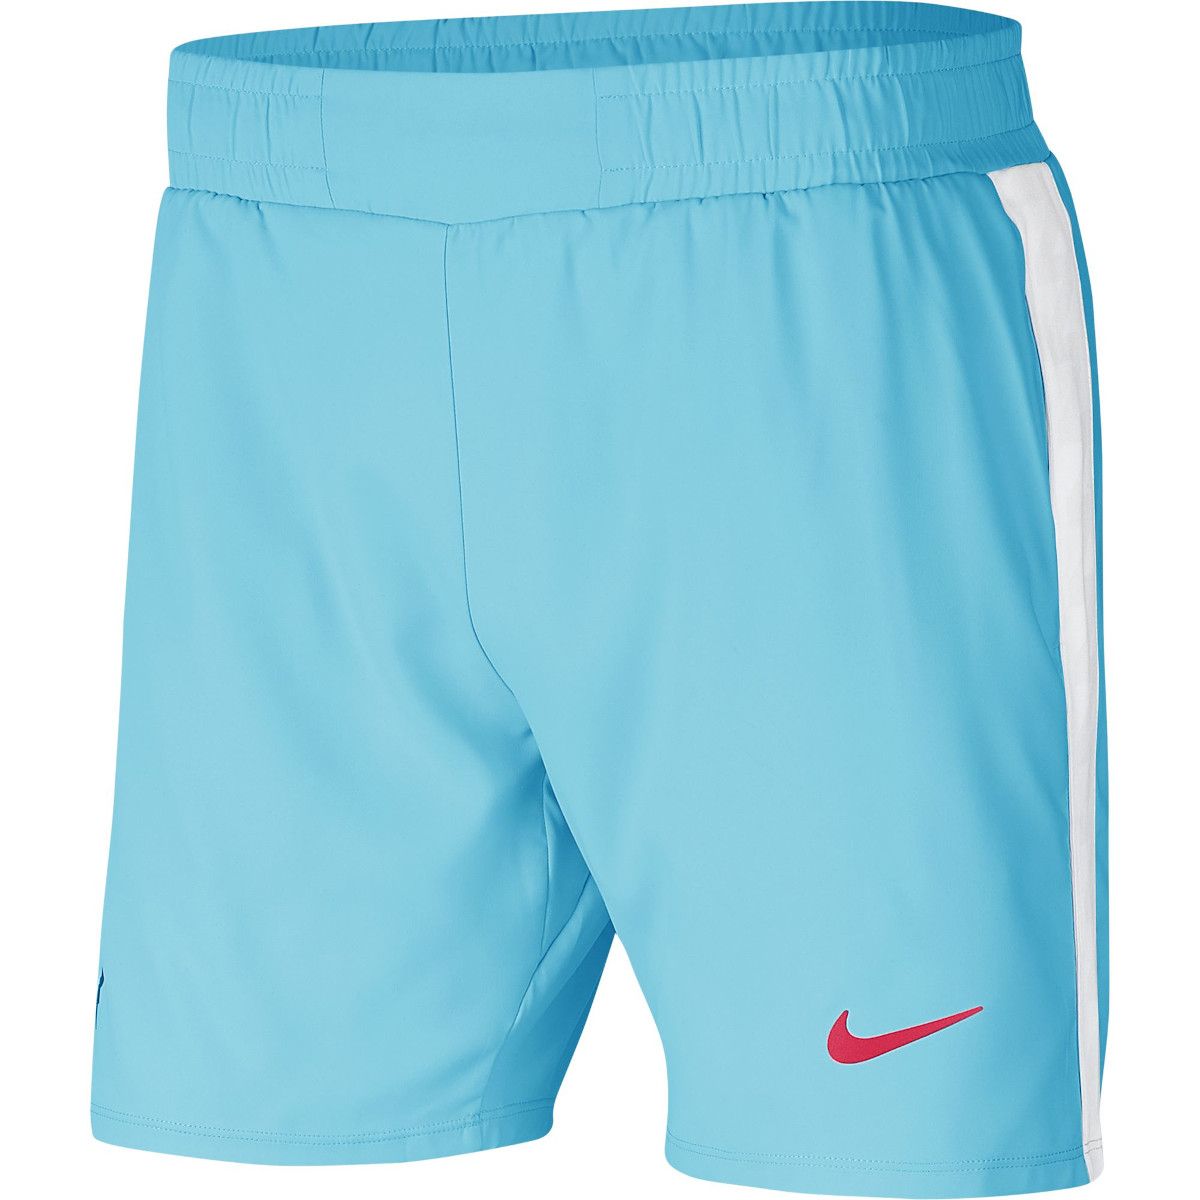 NikeCourt Dri-FIT Rafa 7-inch Men's Tennis Shorts AT4315-445